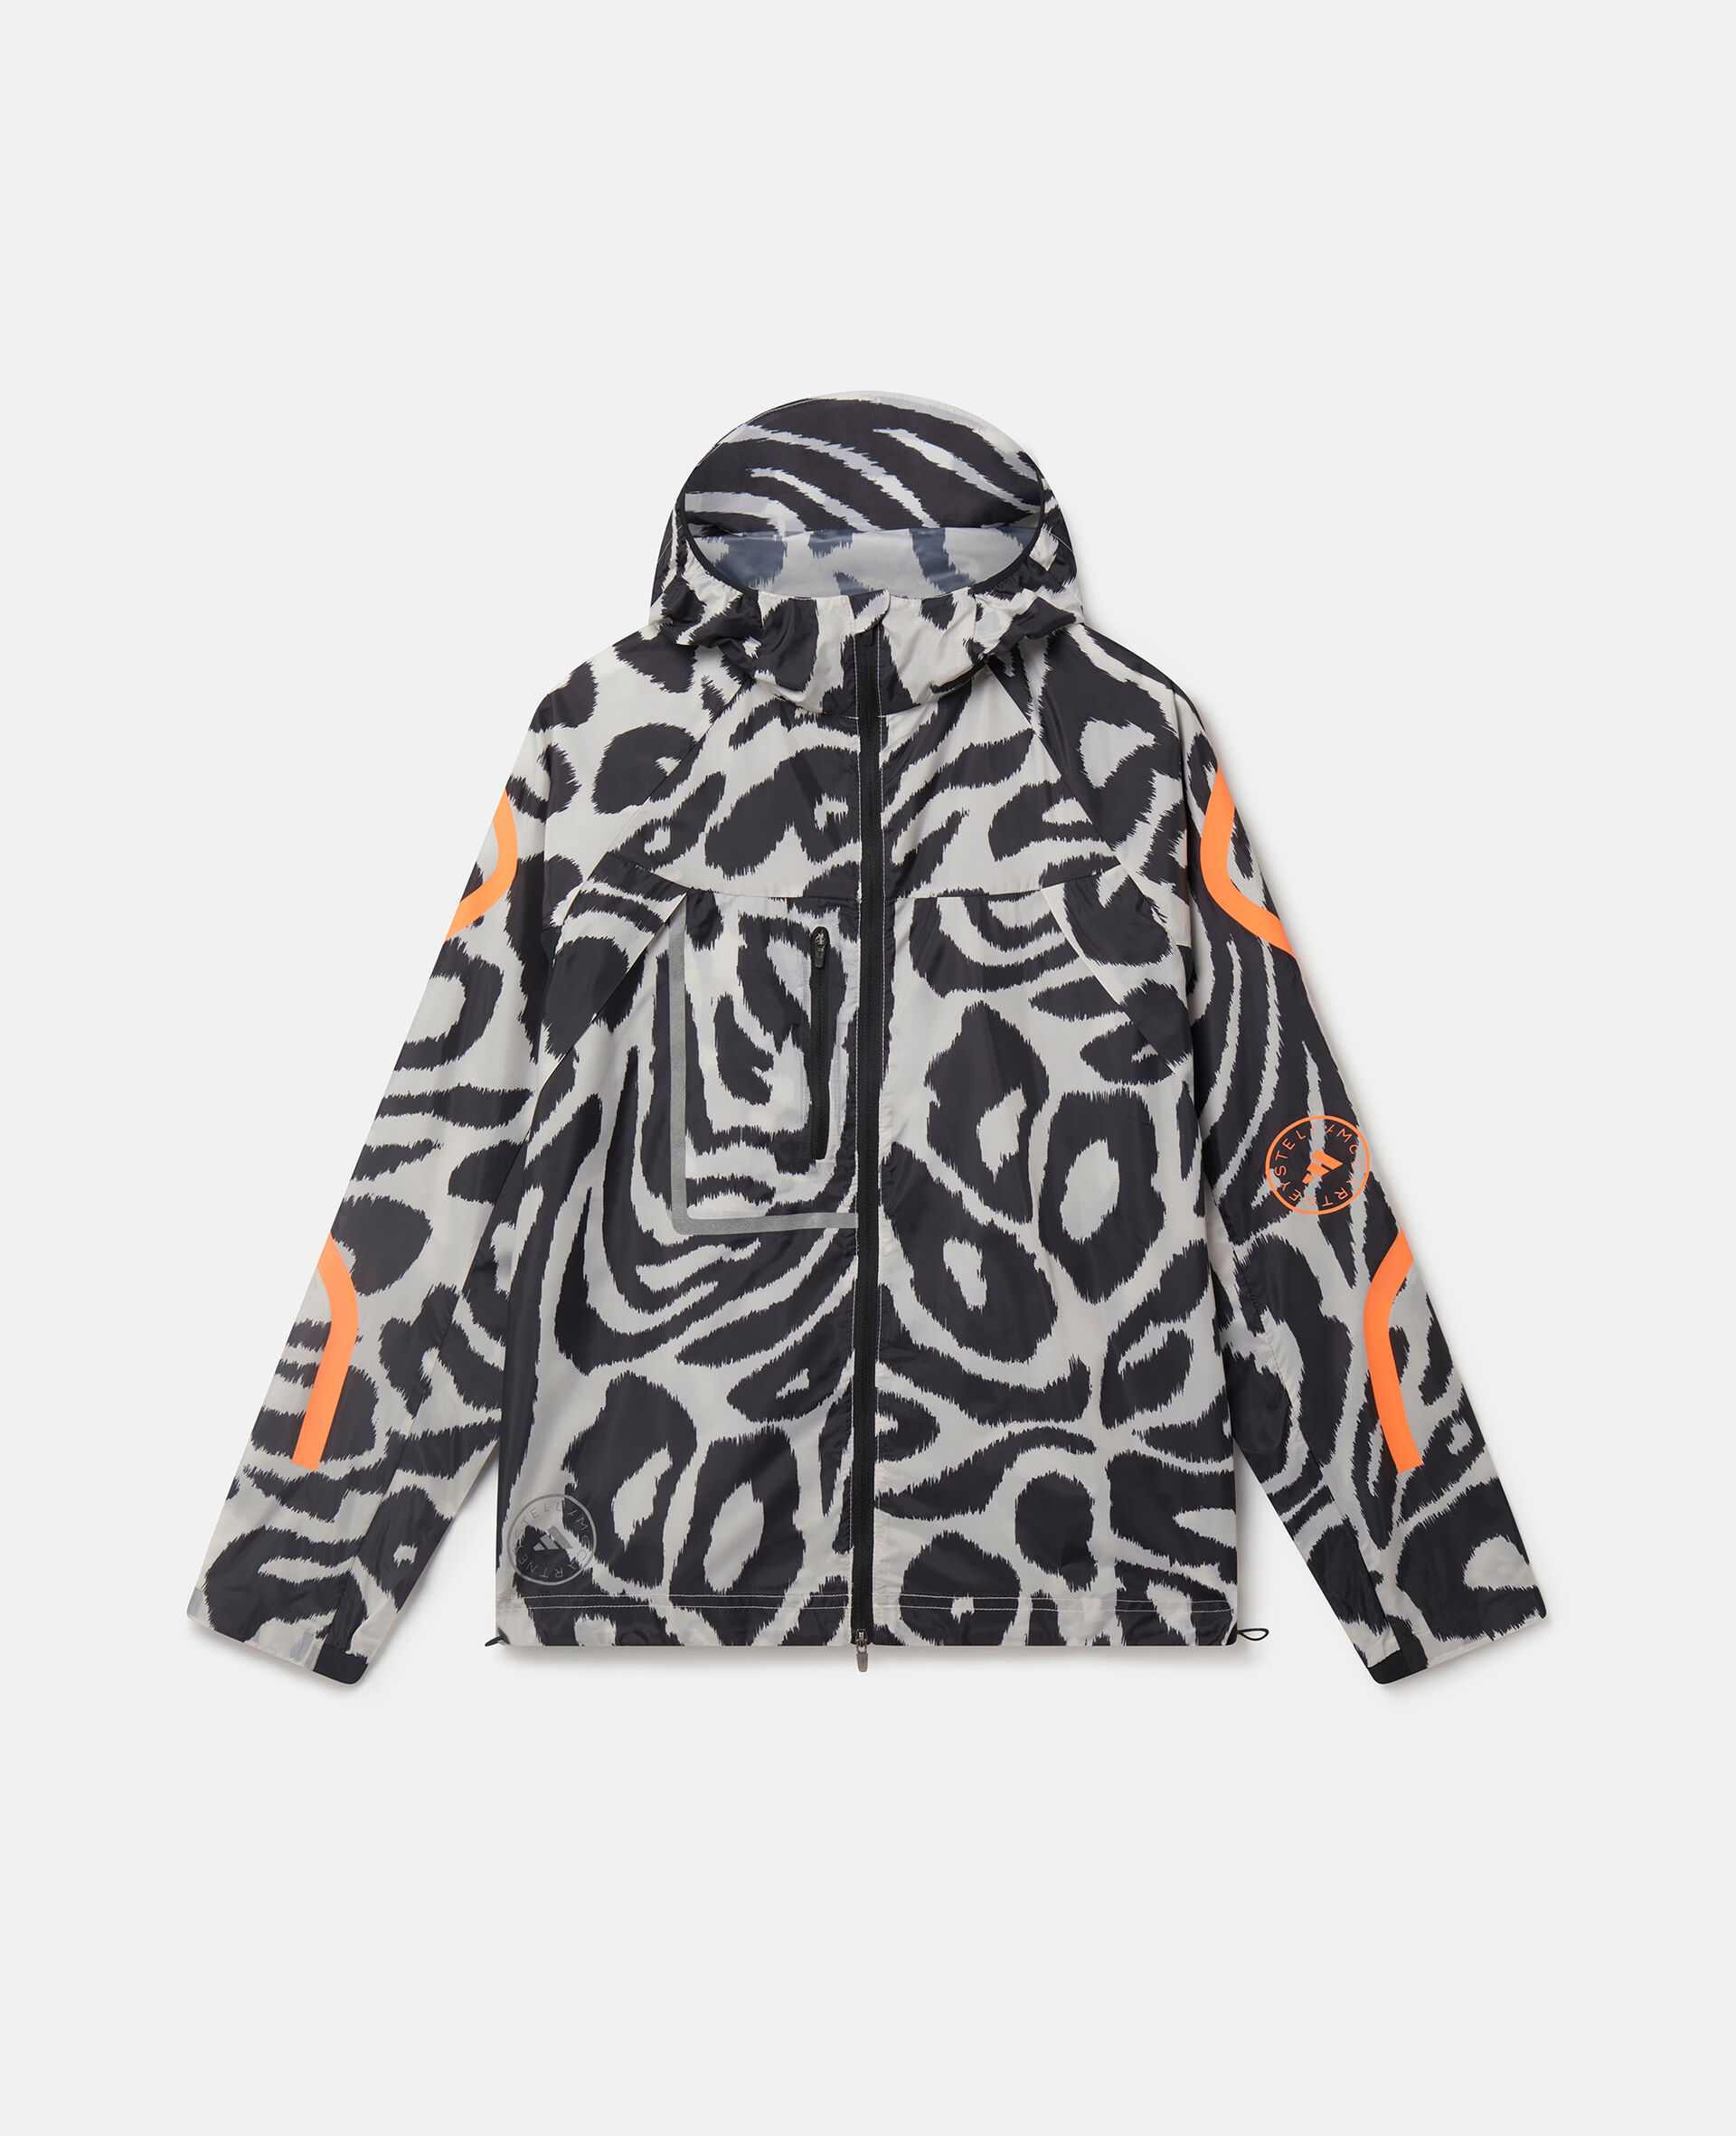 TruePace Leopard Print Running Jacket-Multicoloured-large image number 0